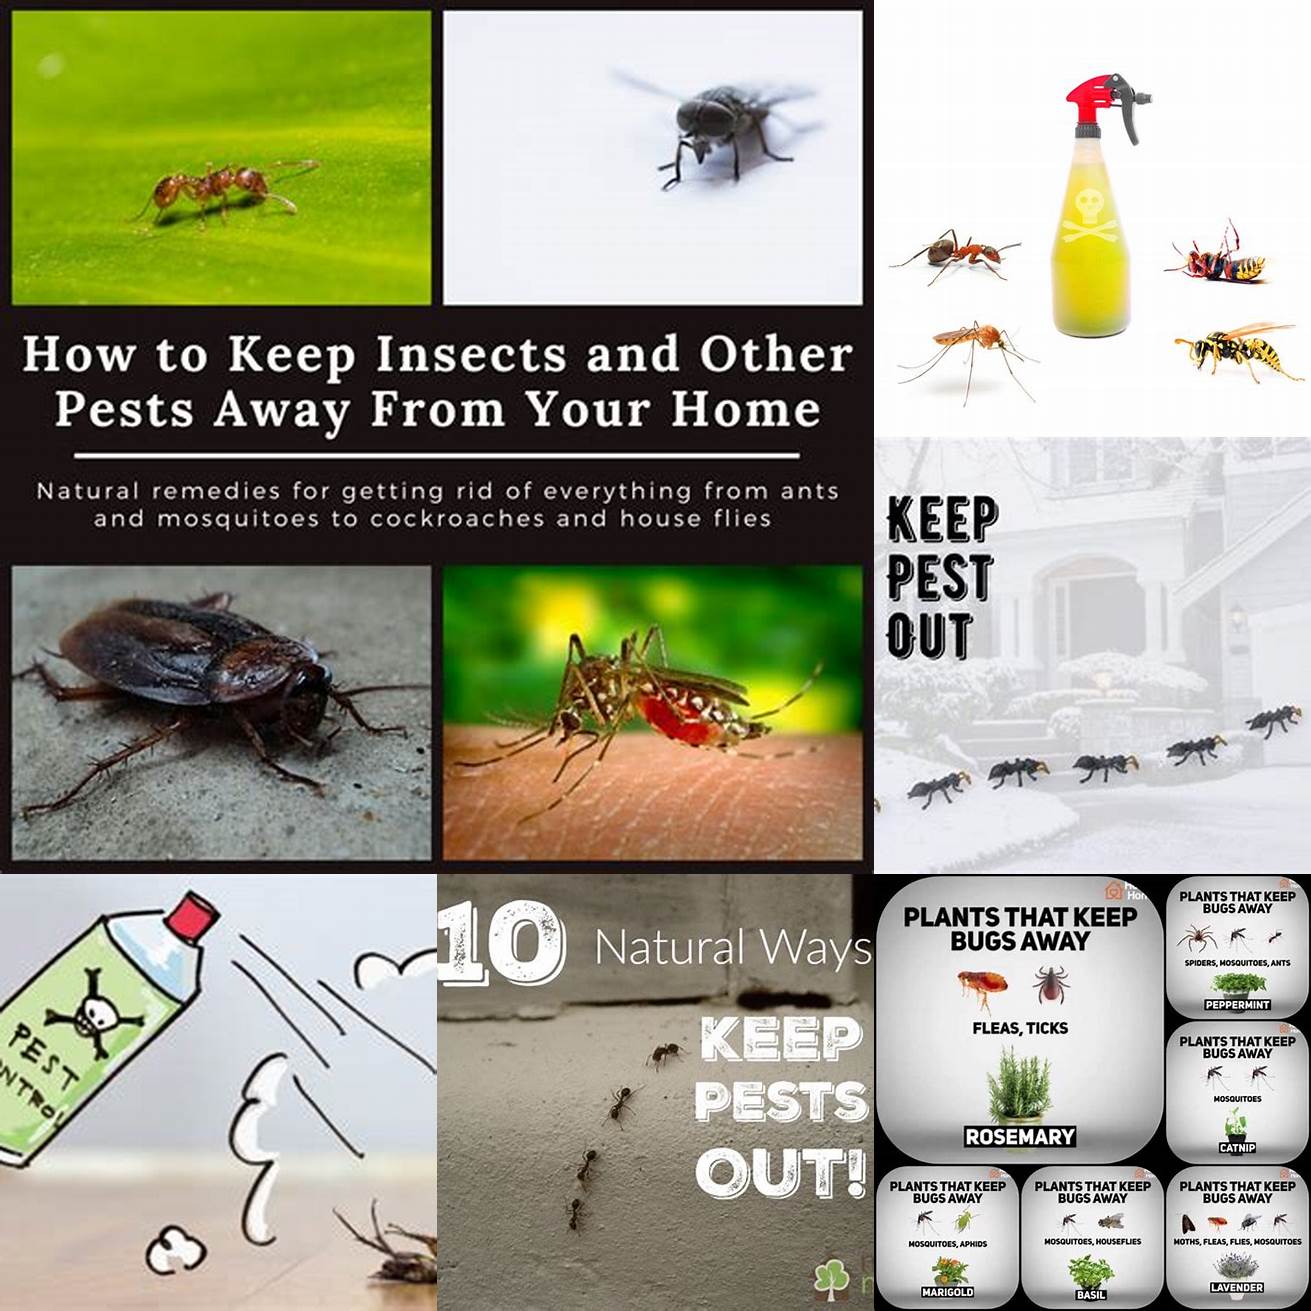 Keeping pests away